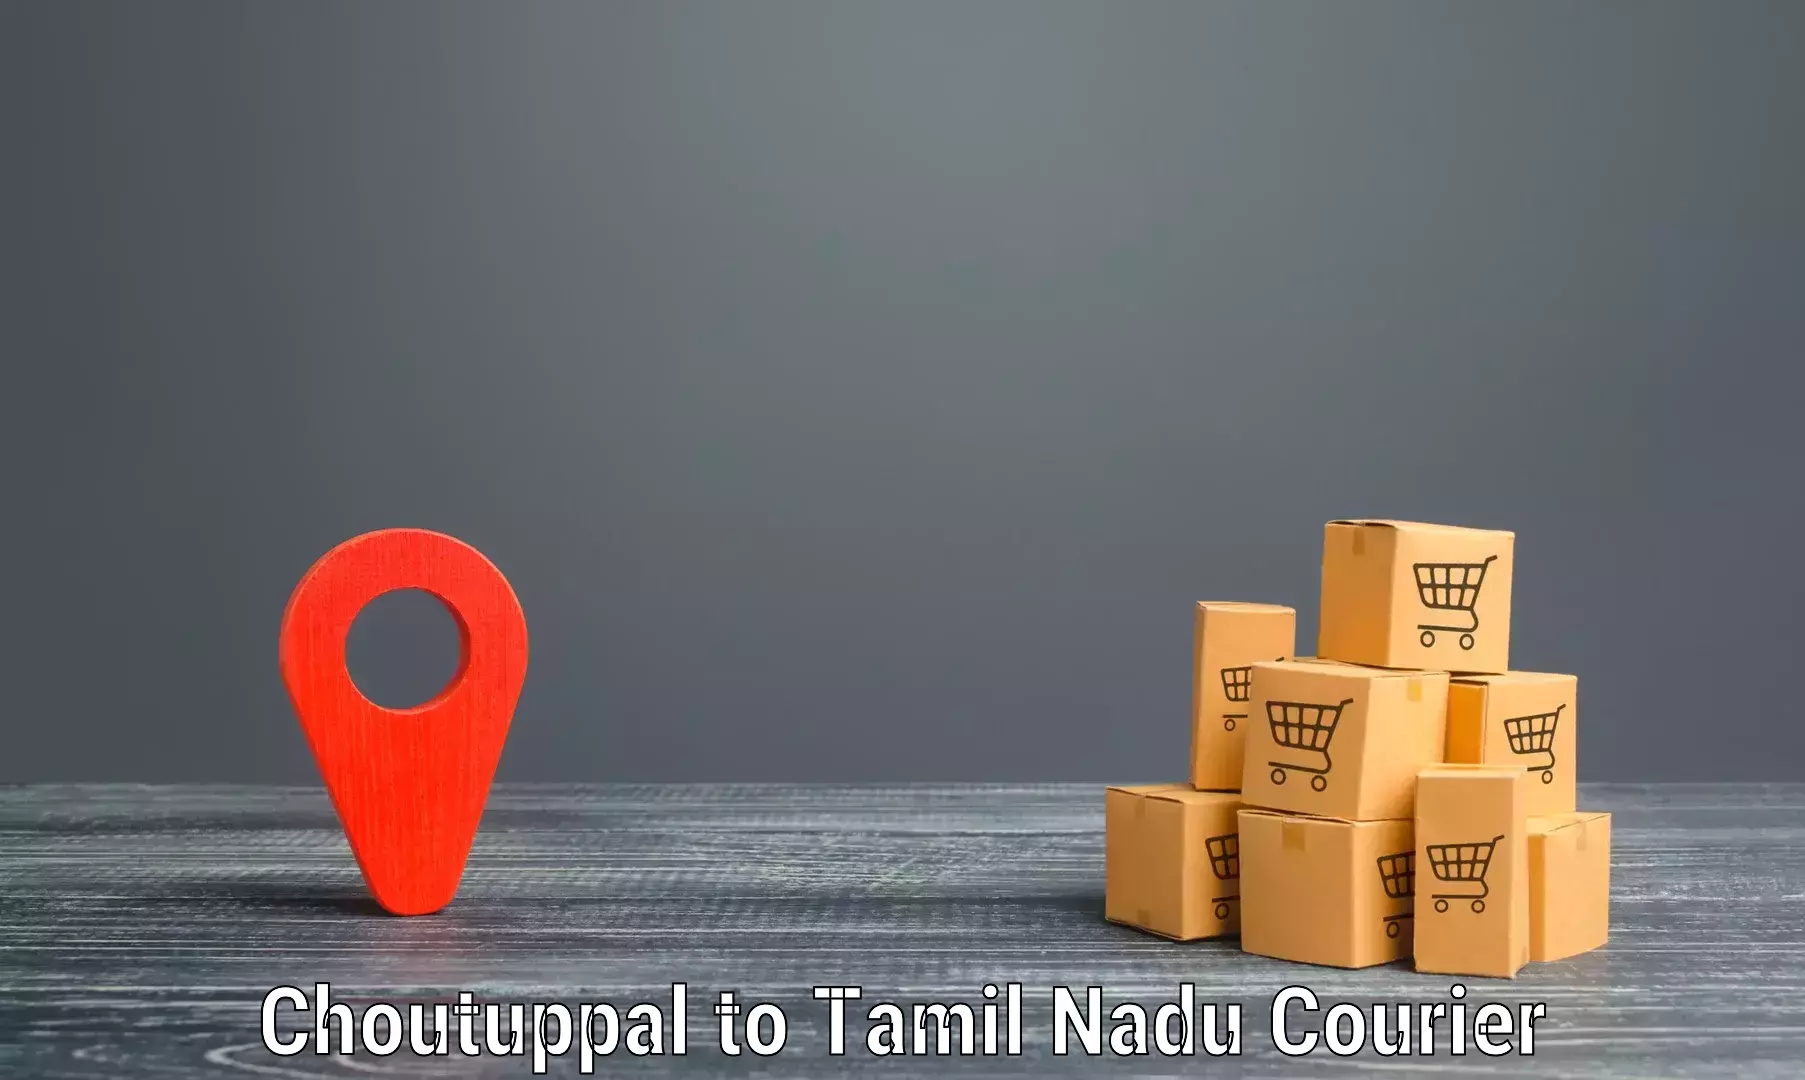 Fast delivery service Choutuppal to Perunali